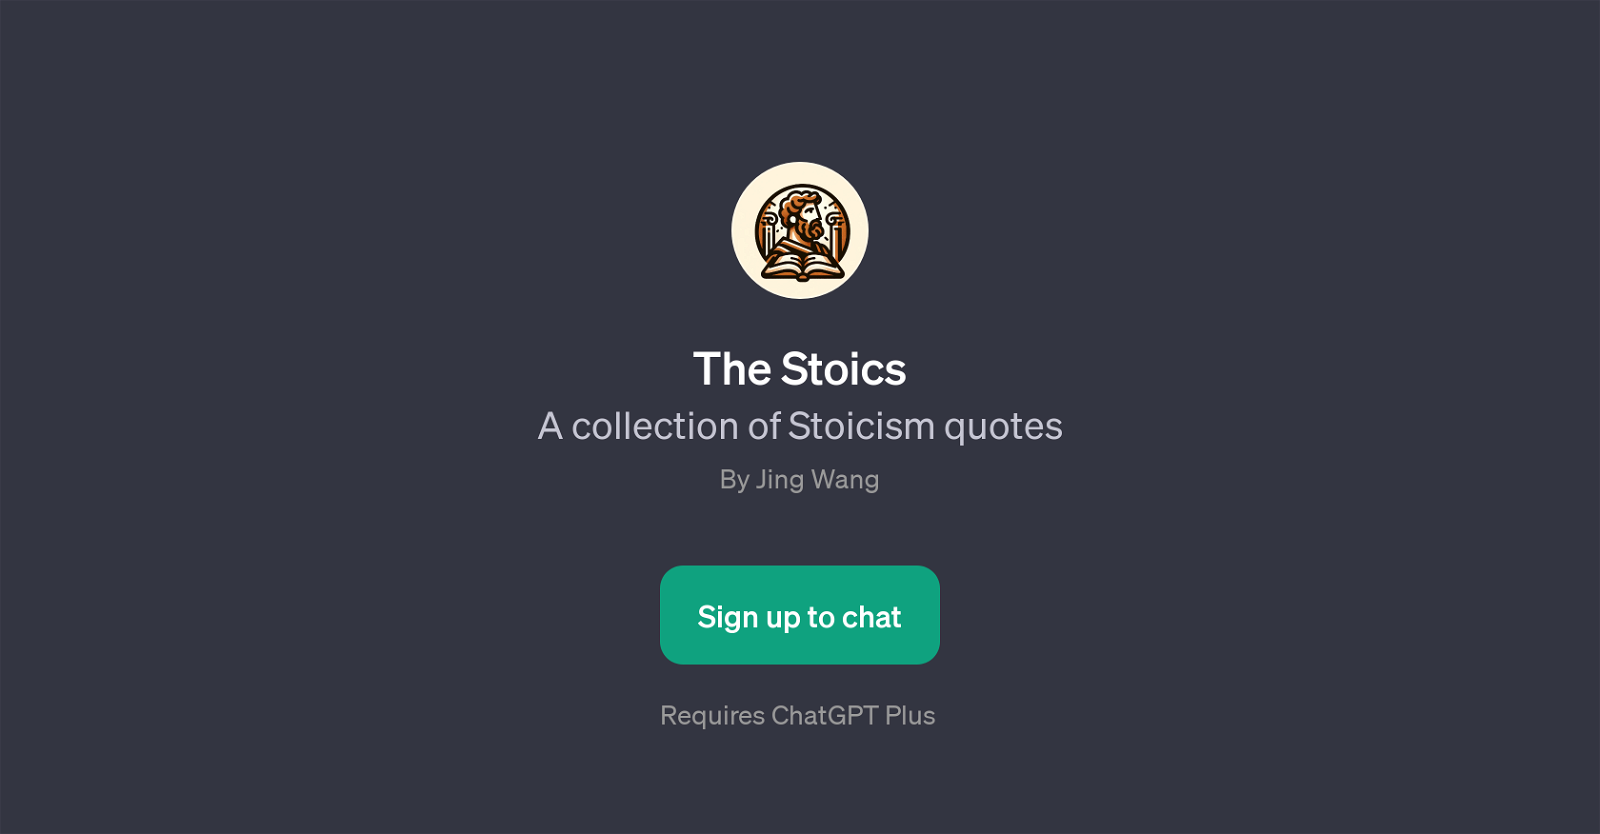 The Stoics website